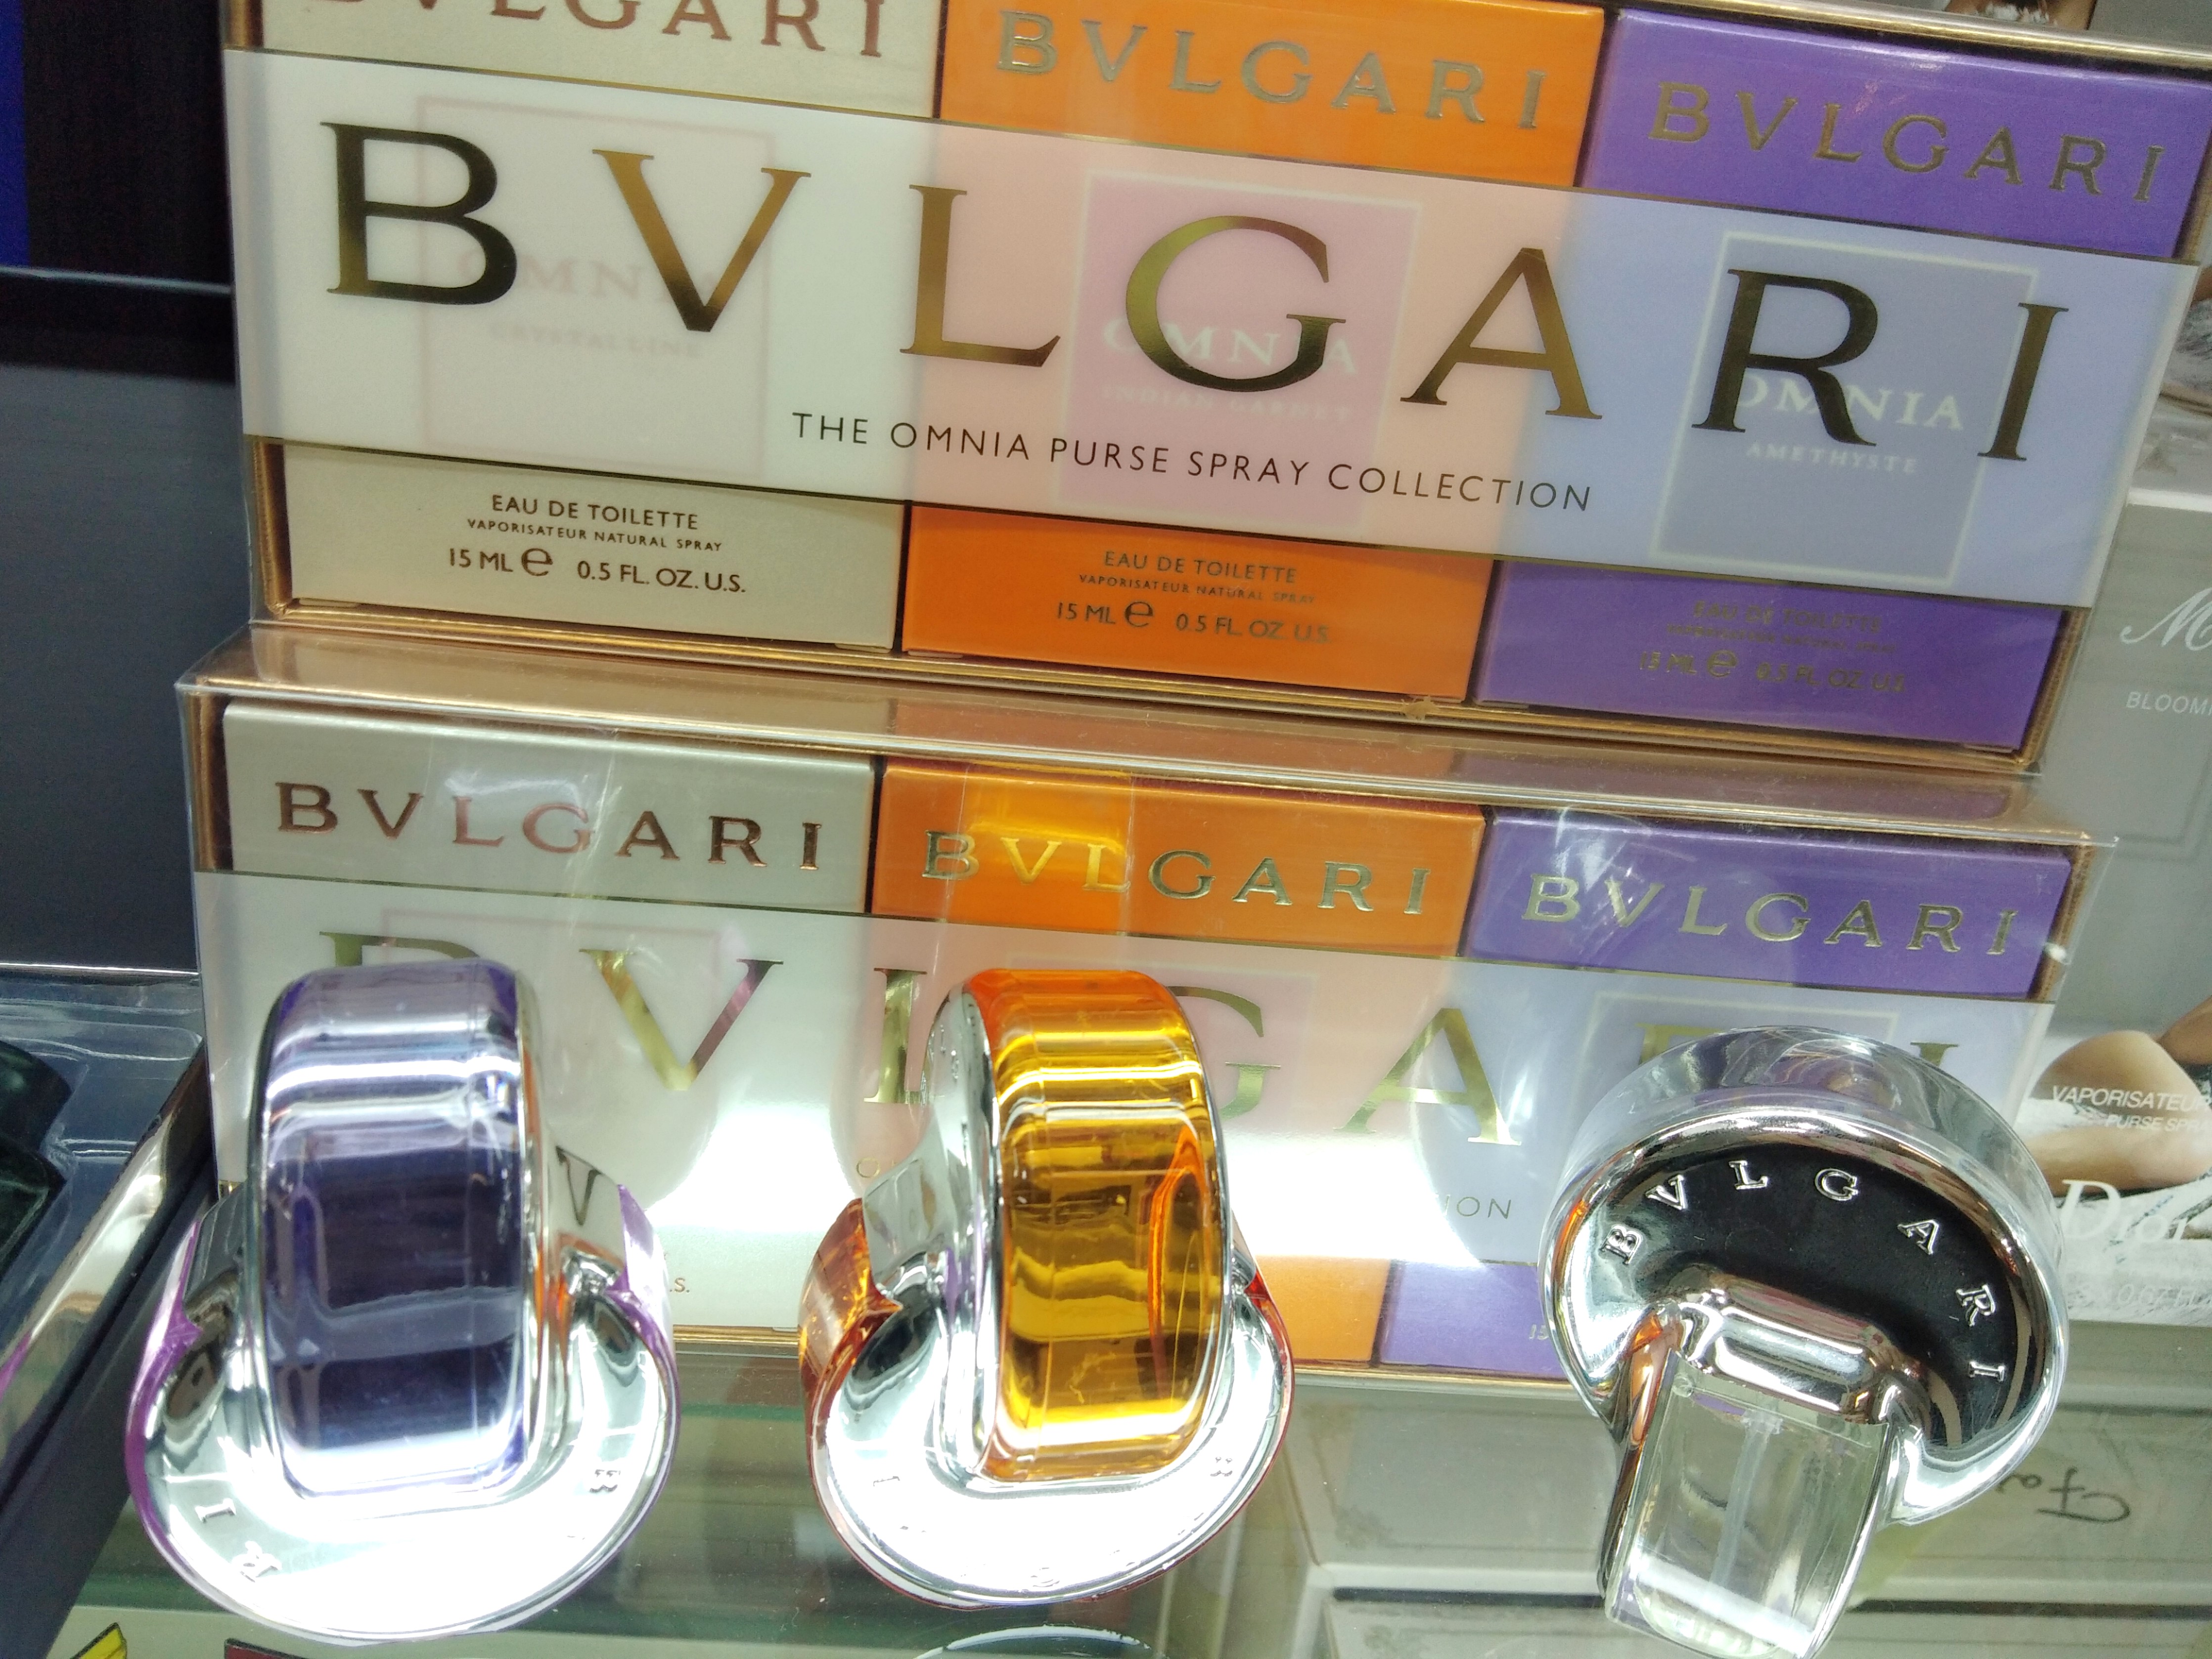 bvlgari the omnia purse spray collection